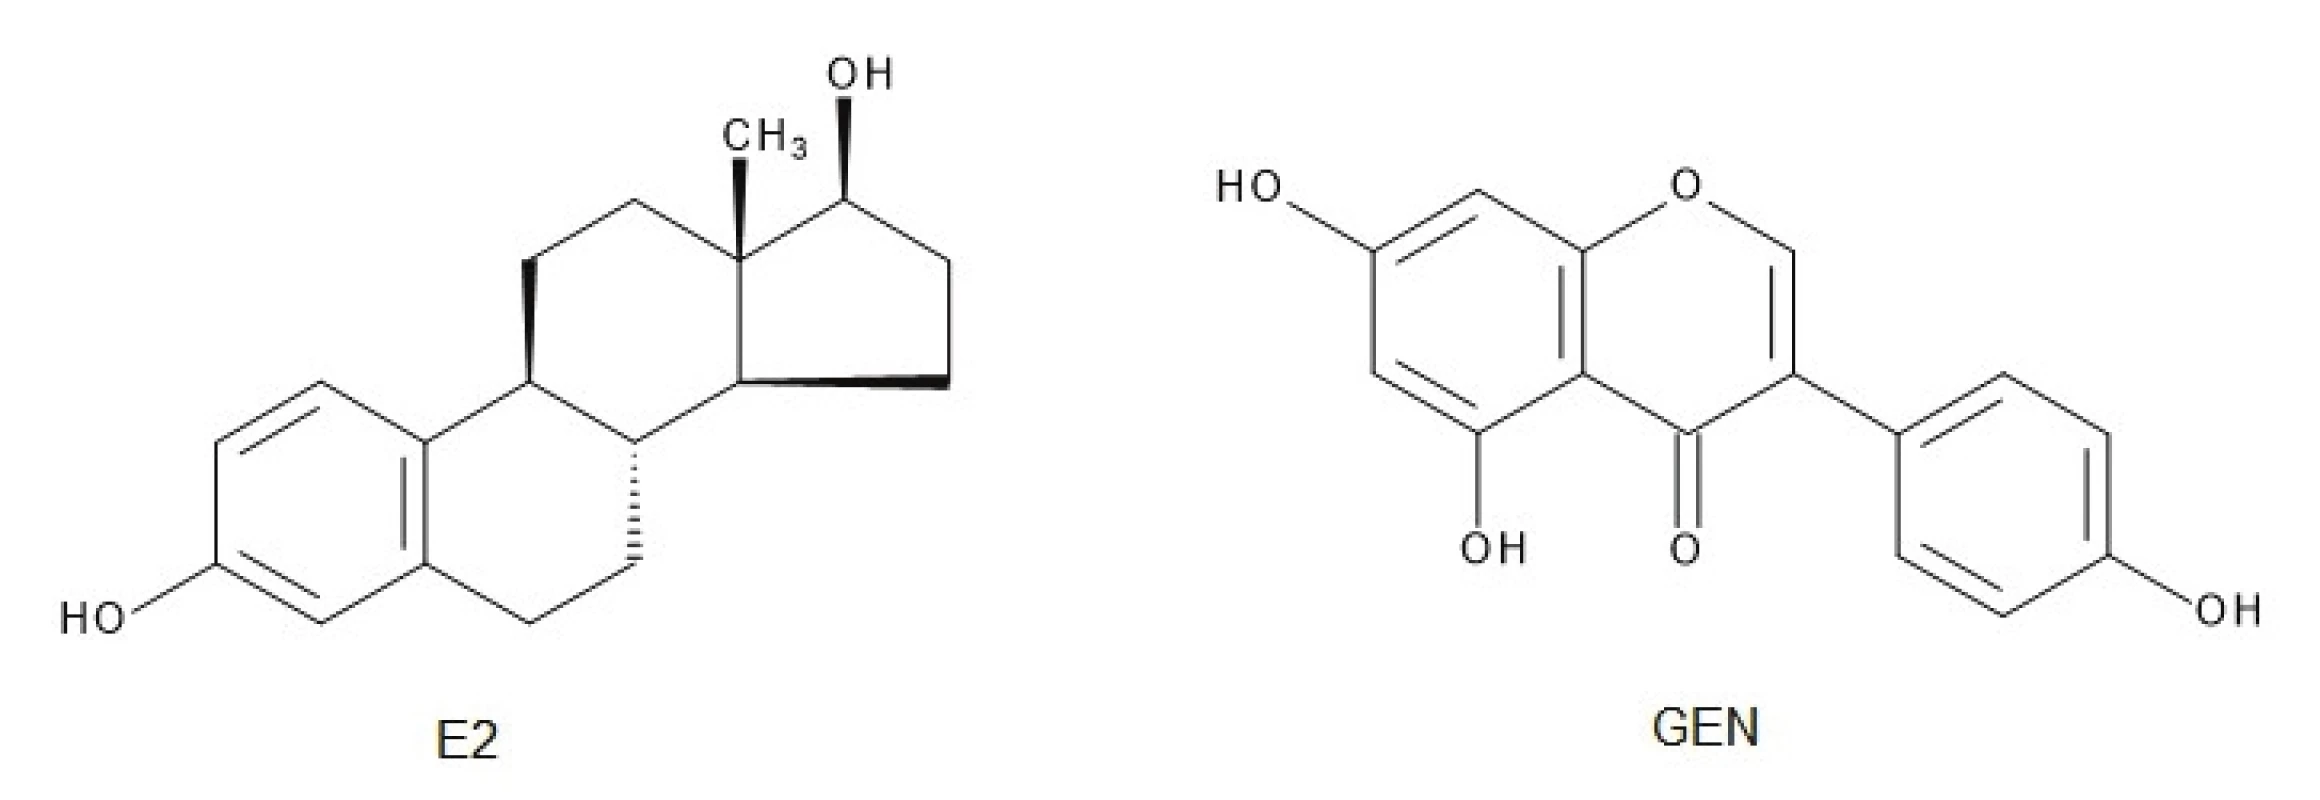 Štruktúra estradiolu (E2) a genisteínu (GEN)